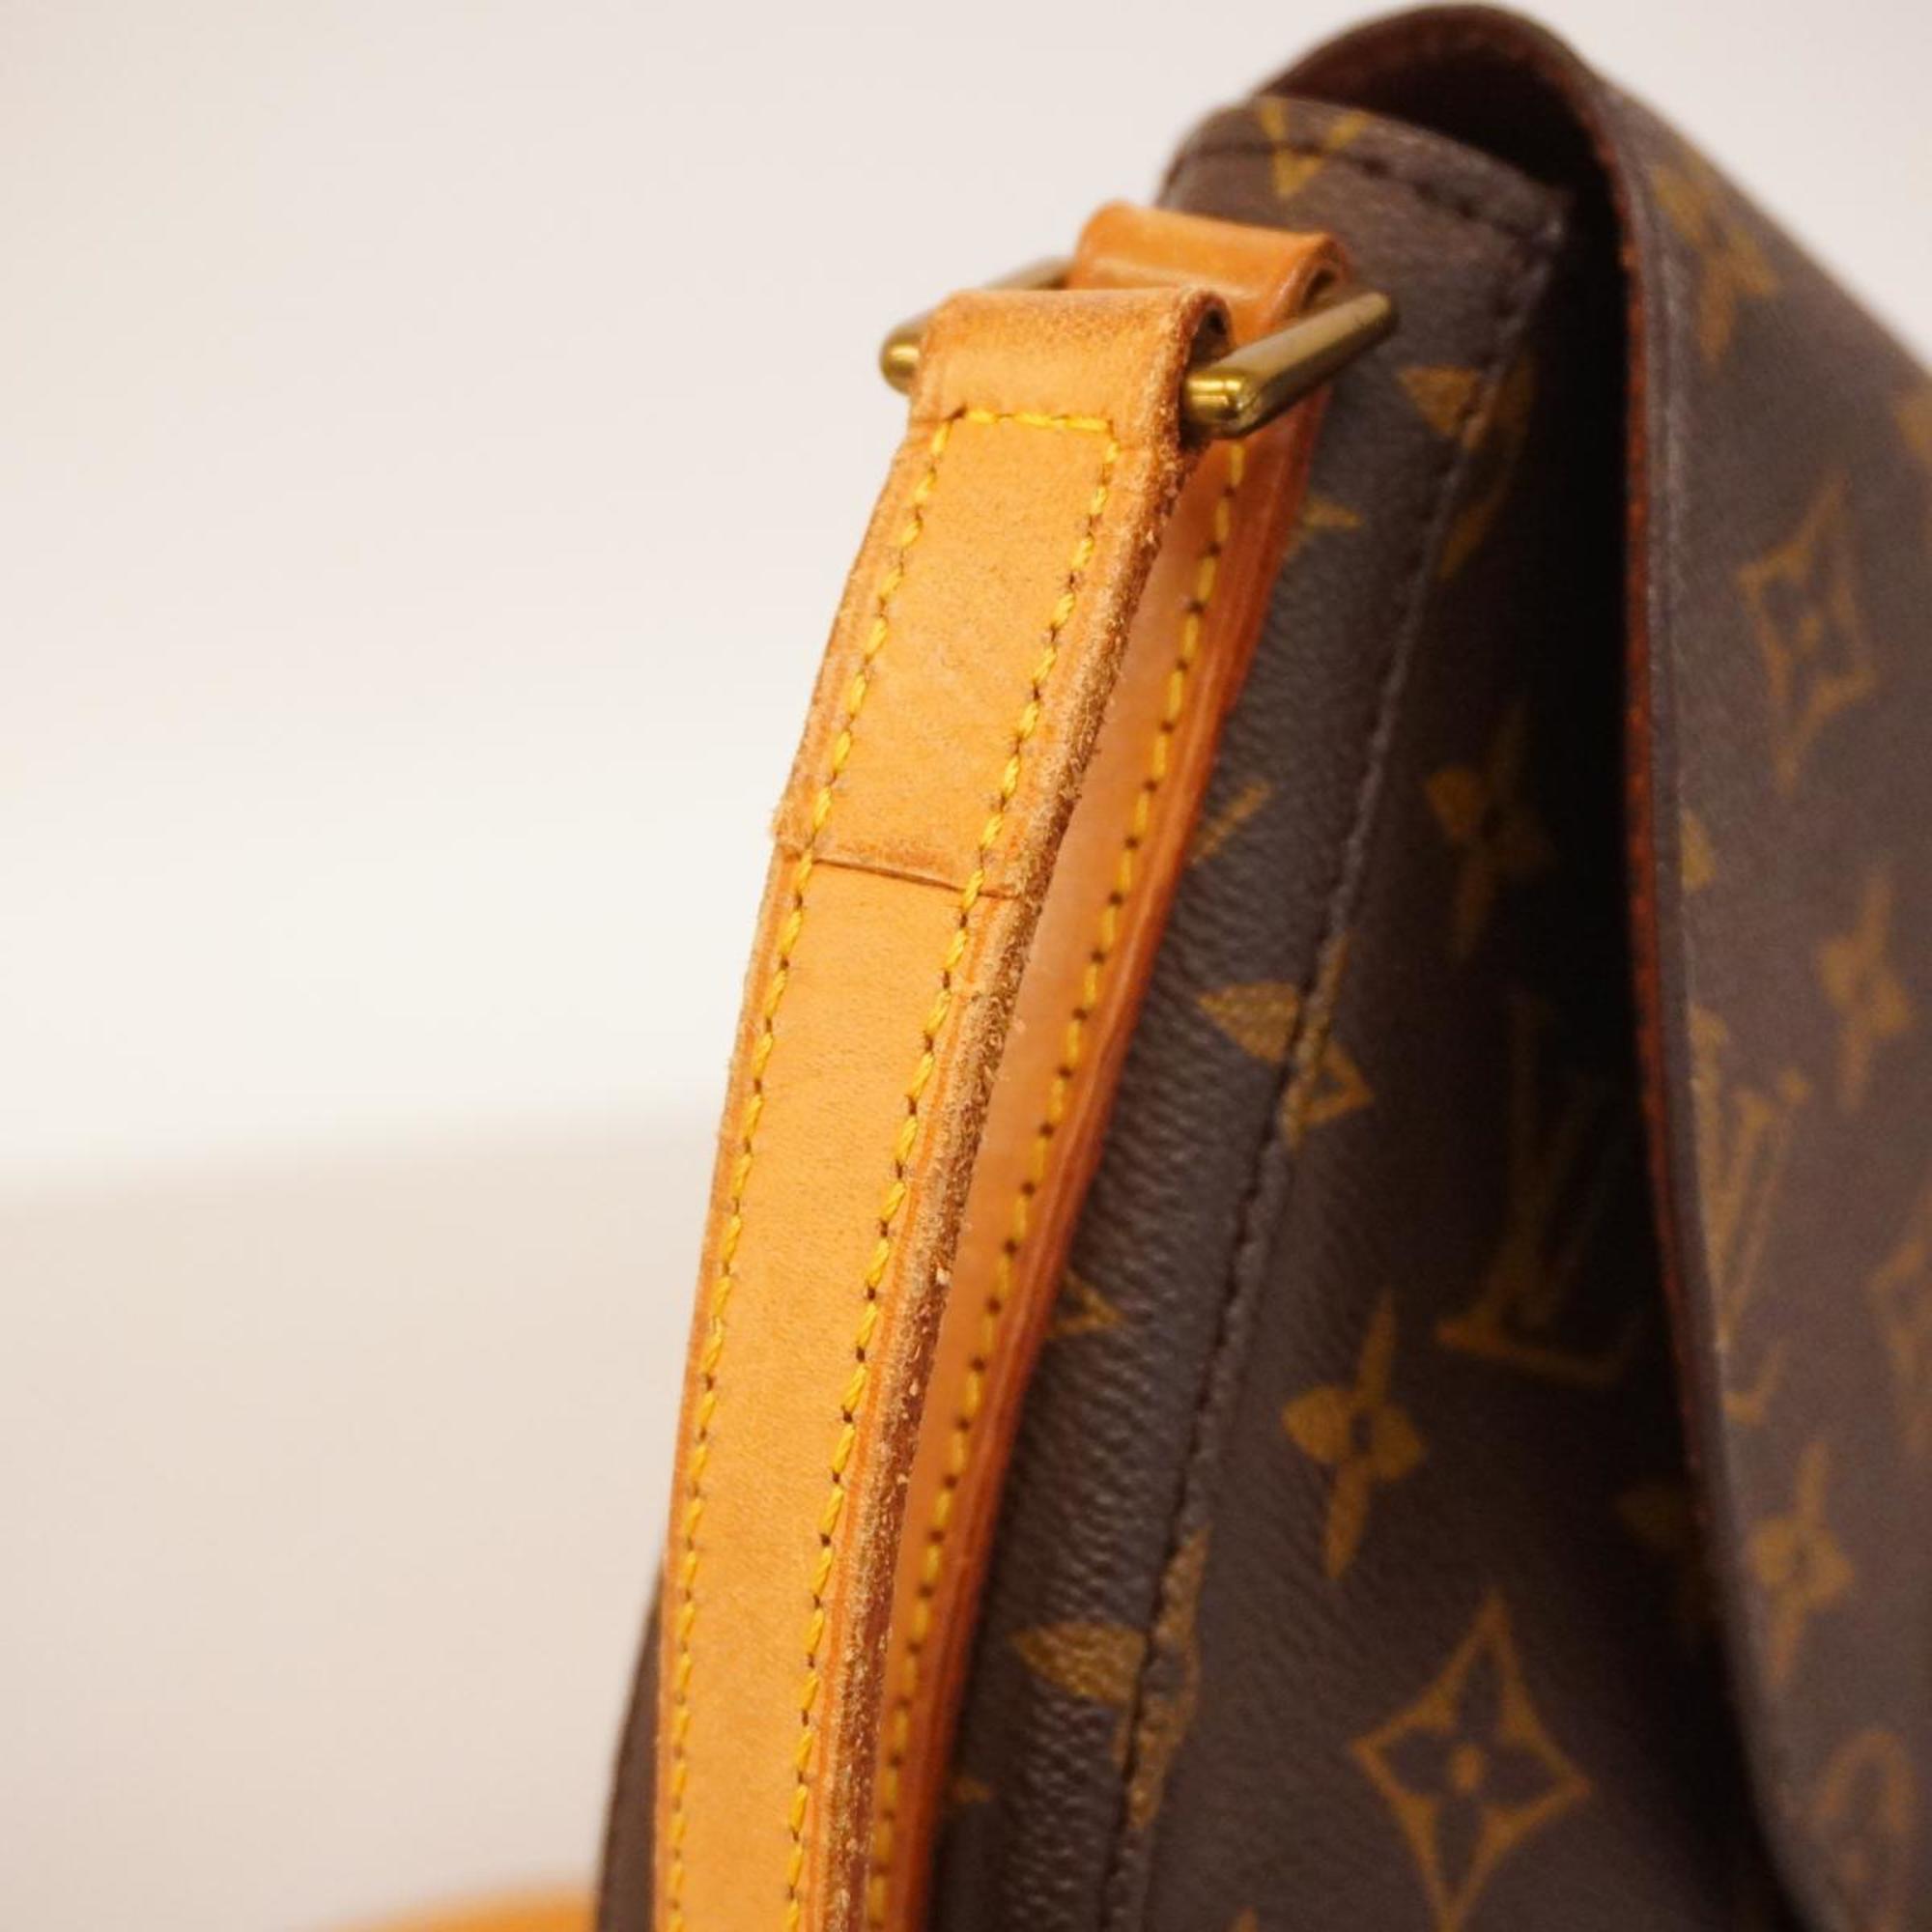 Louis Vuitton Shoulder Bag Monogram Shanti MM M51233 Brown Ladies